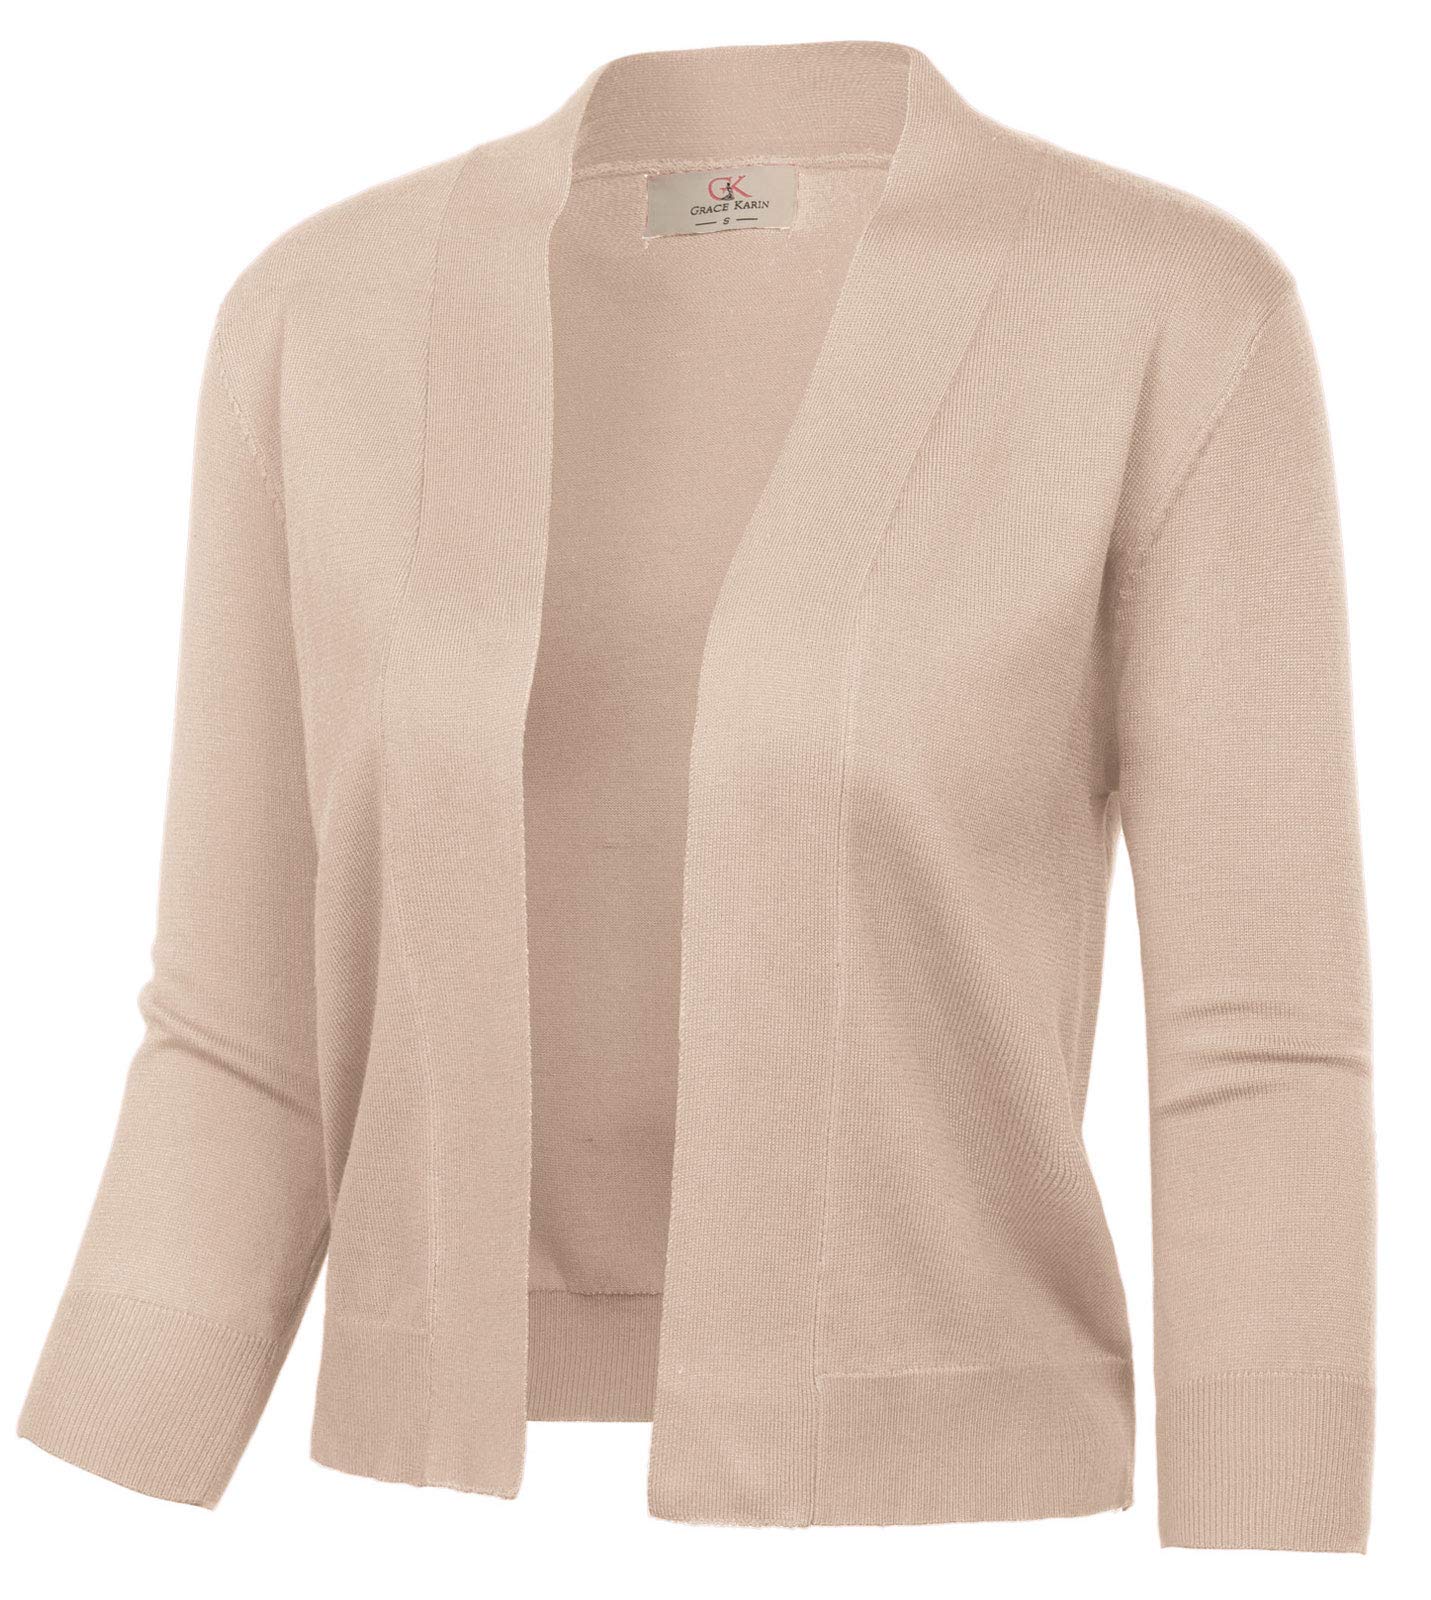 GRACE KARIN Women's Classic Sweaters Plus Size Open Front Shrug Cropped Bolero Jacket for Cocktail Party Dress(Khaki,XXL)